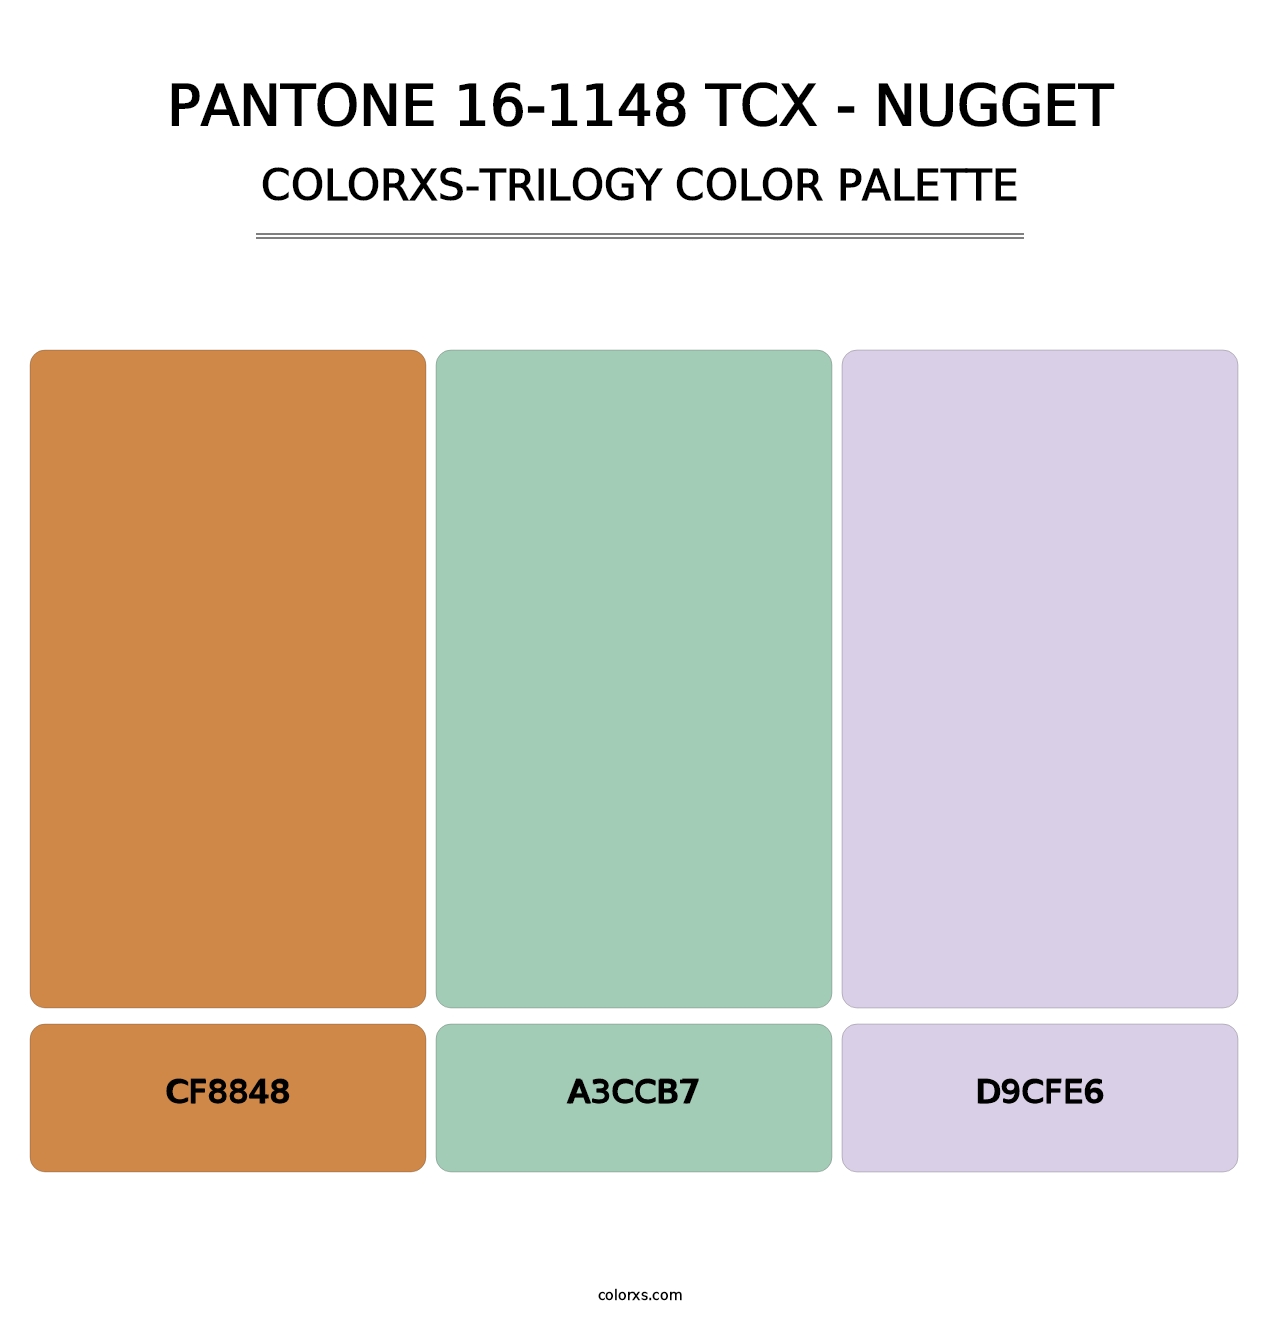 PANTONE 16-1148 TCX - Nugget - Colorxs Trilogy Palette